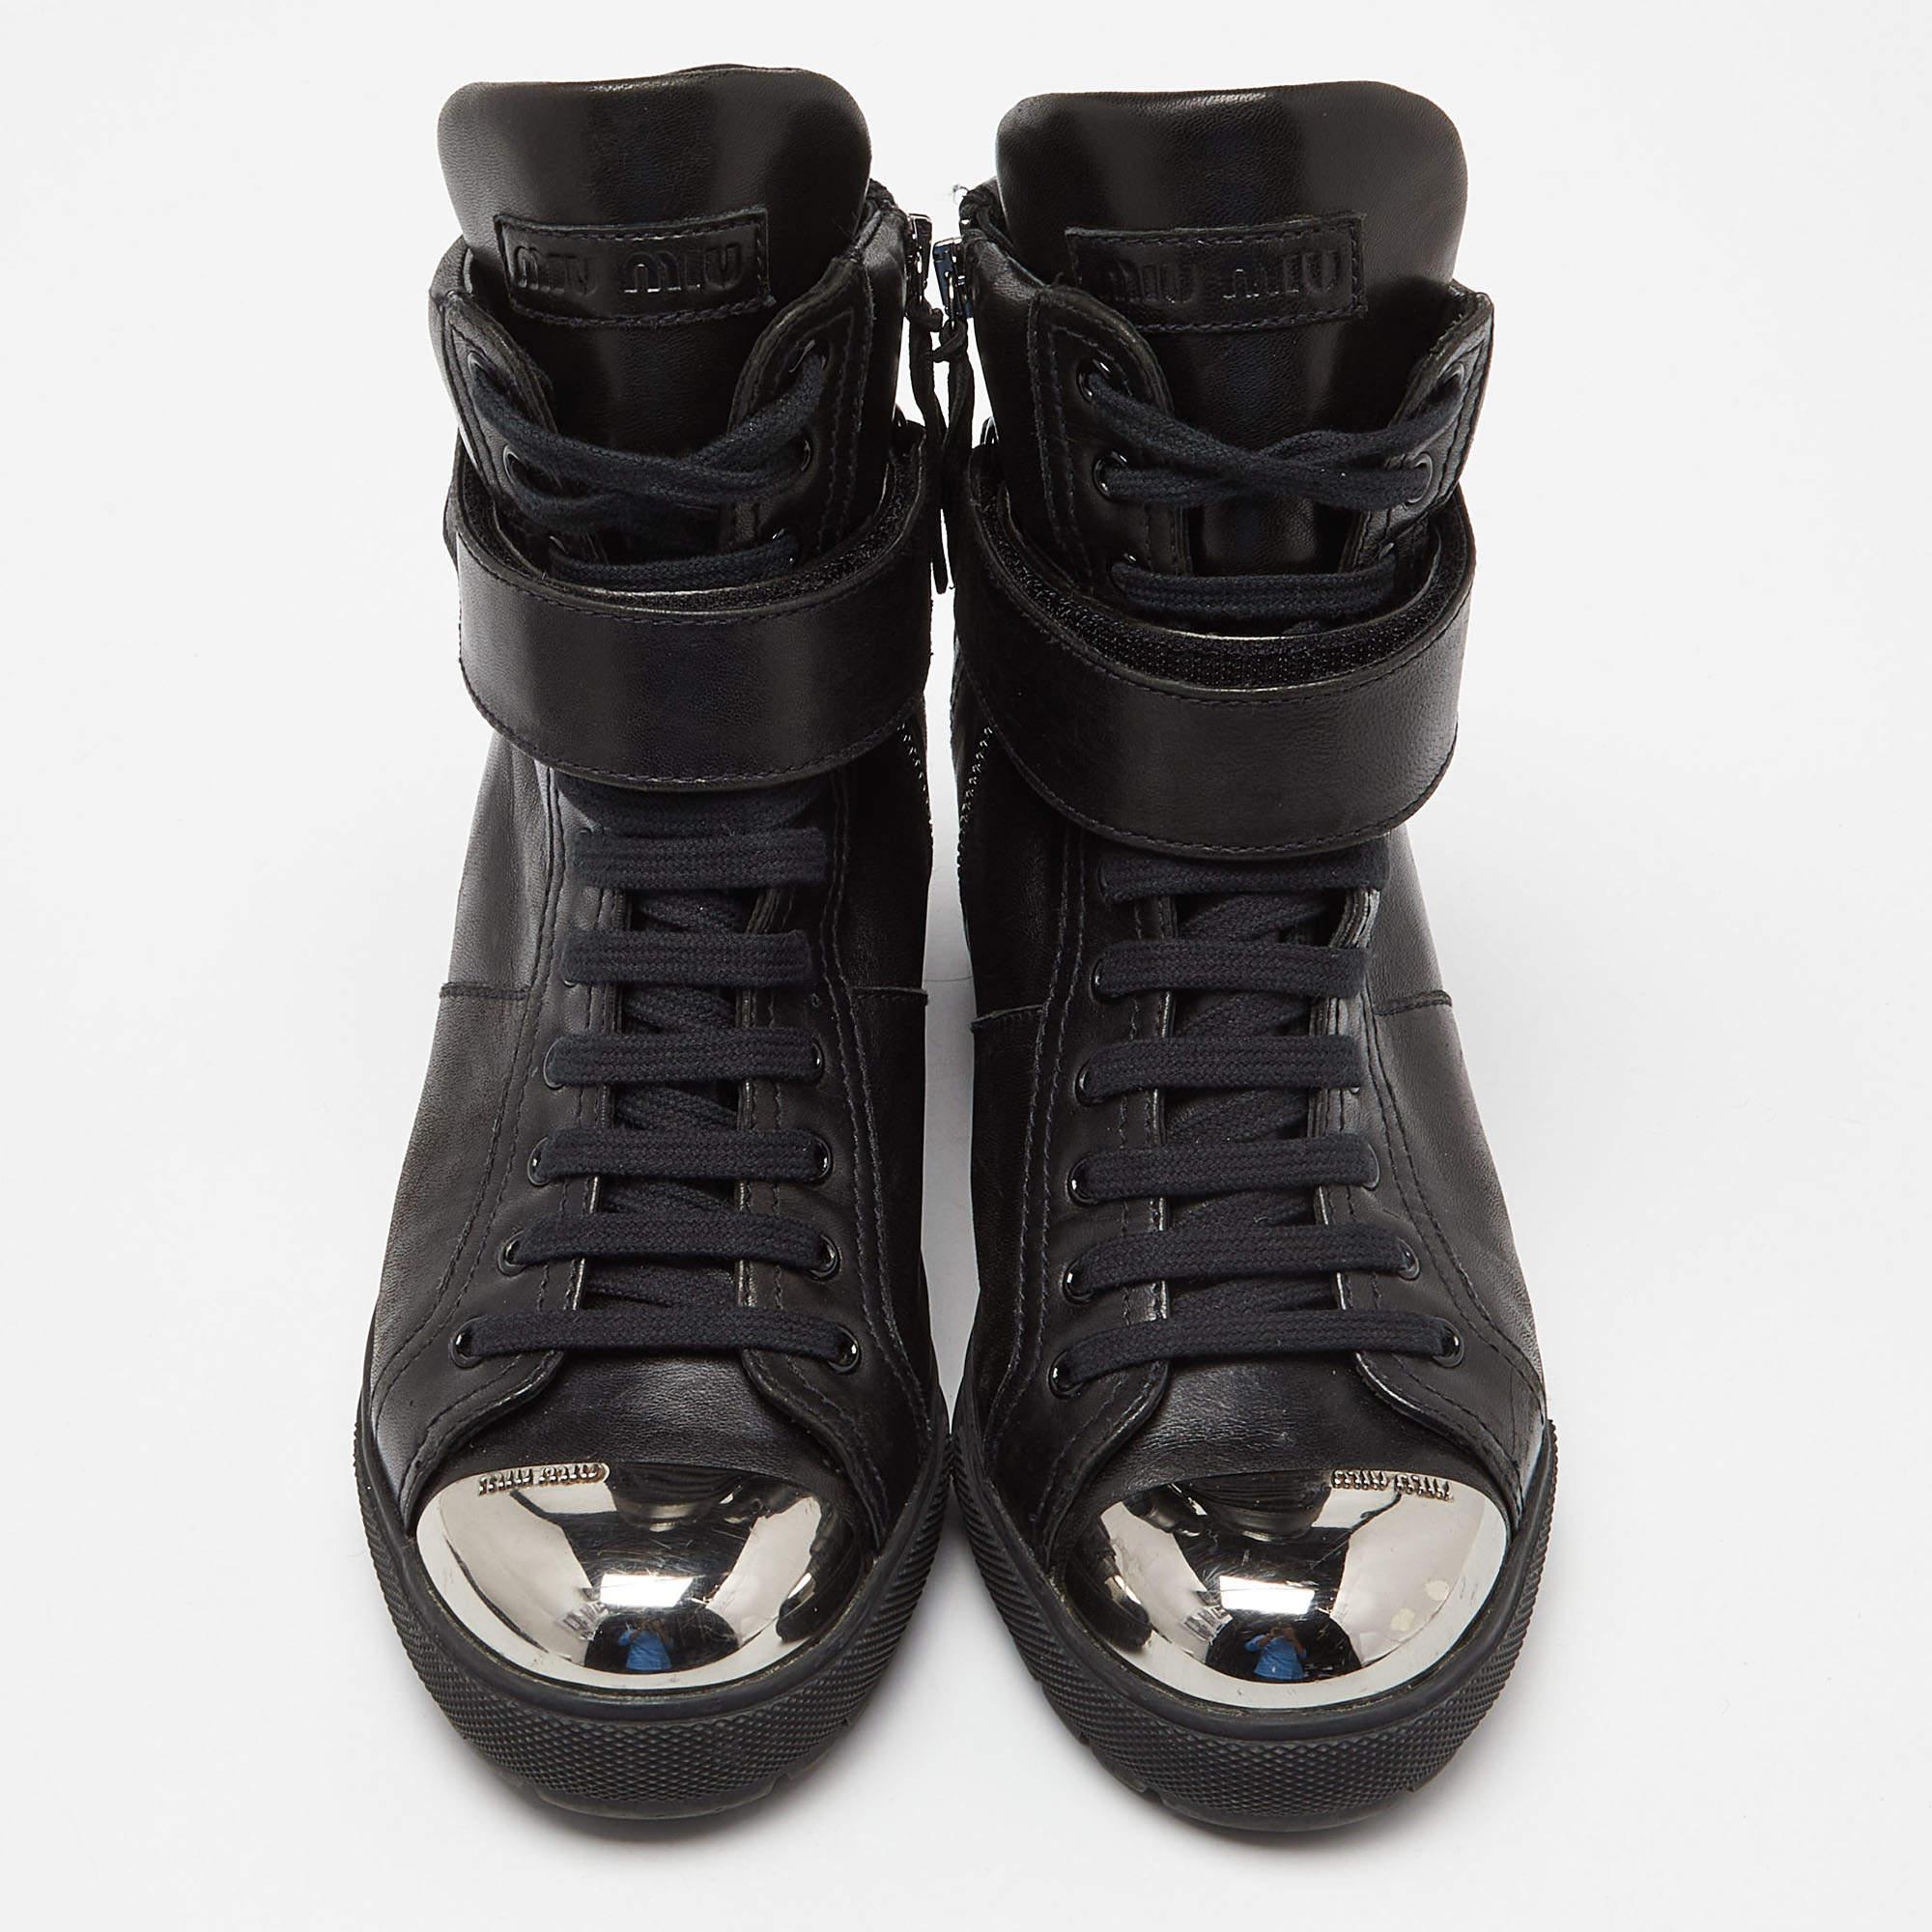 Miu Miu Black Leather Toe Cap Wedge Ankle Boots Size 38.5 In Good Condition For Sale In Dubai, Al Qouz 2